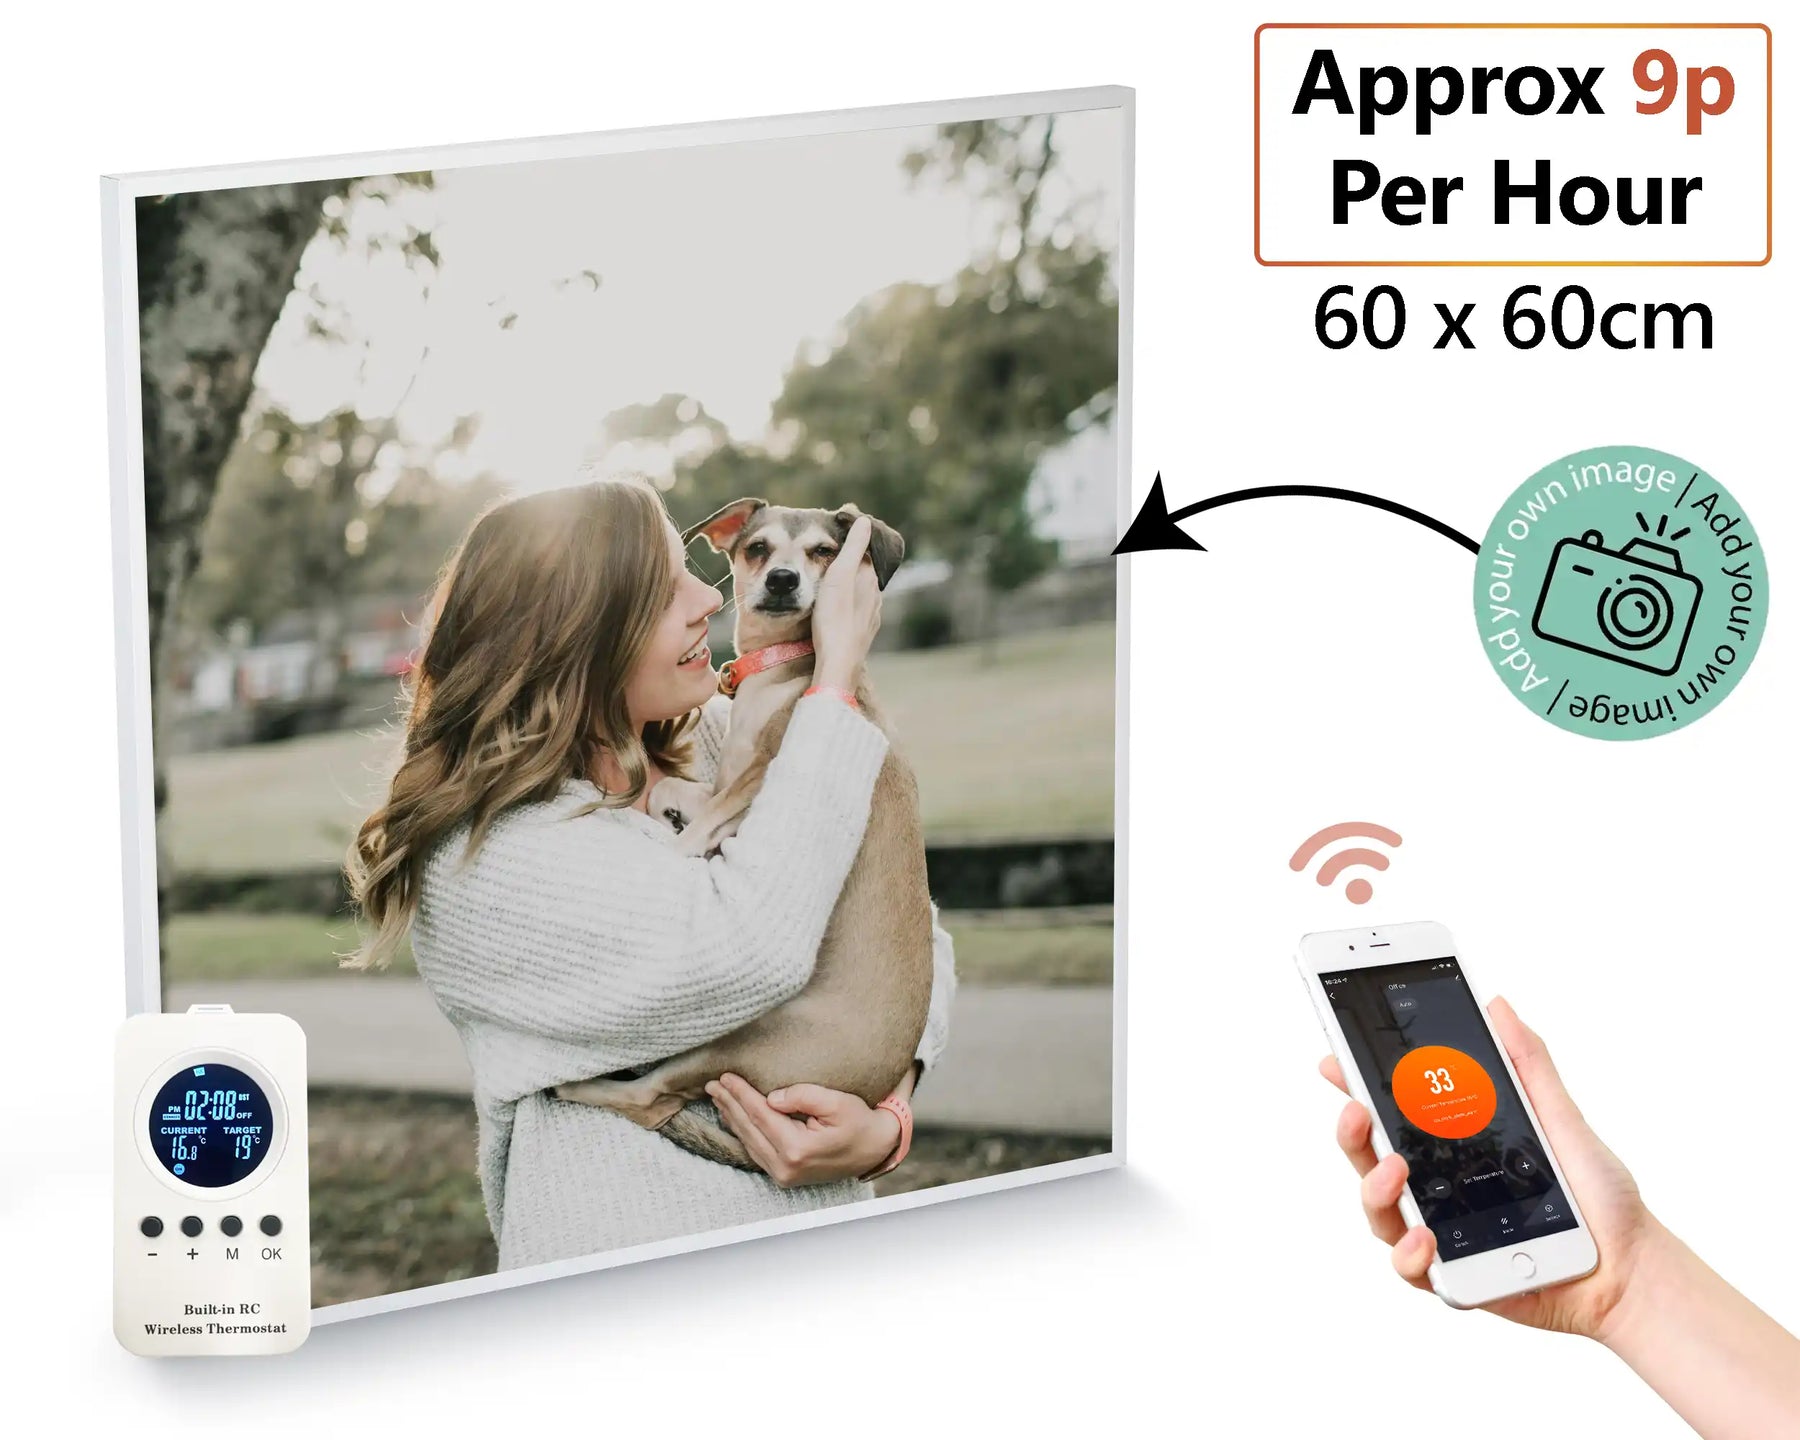 350W Custom Image - Smart Wi-Fi Infrared Heating Panel - 60 x 60cm